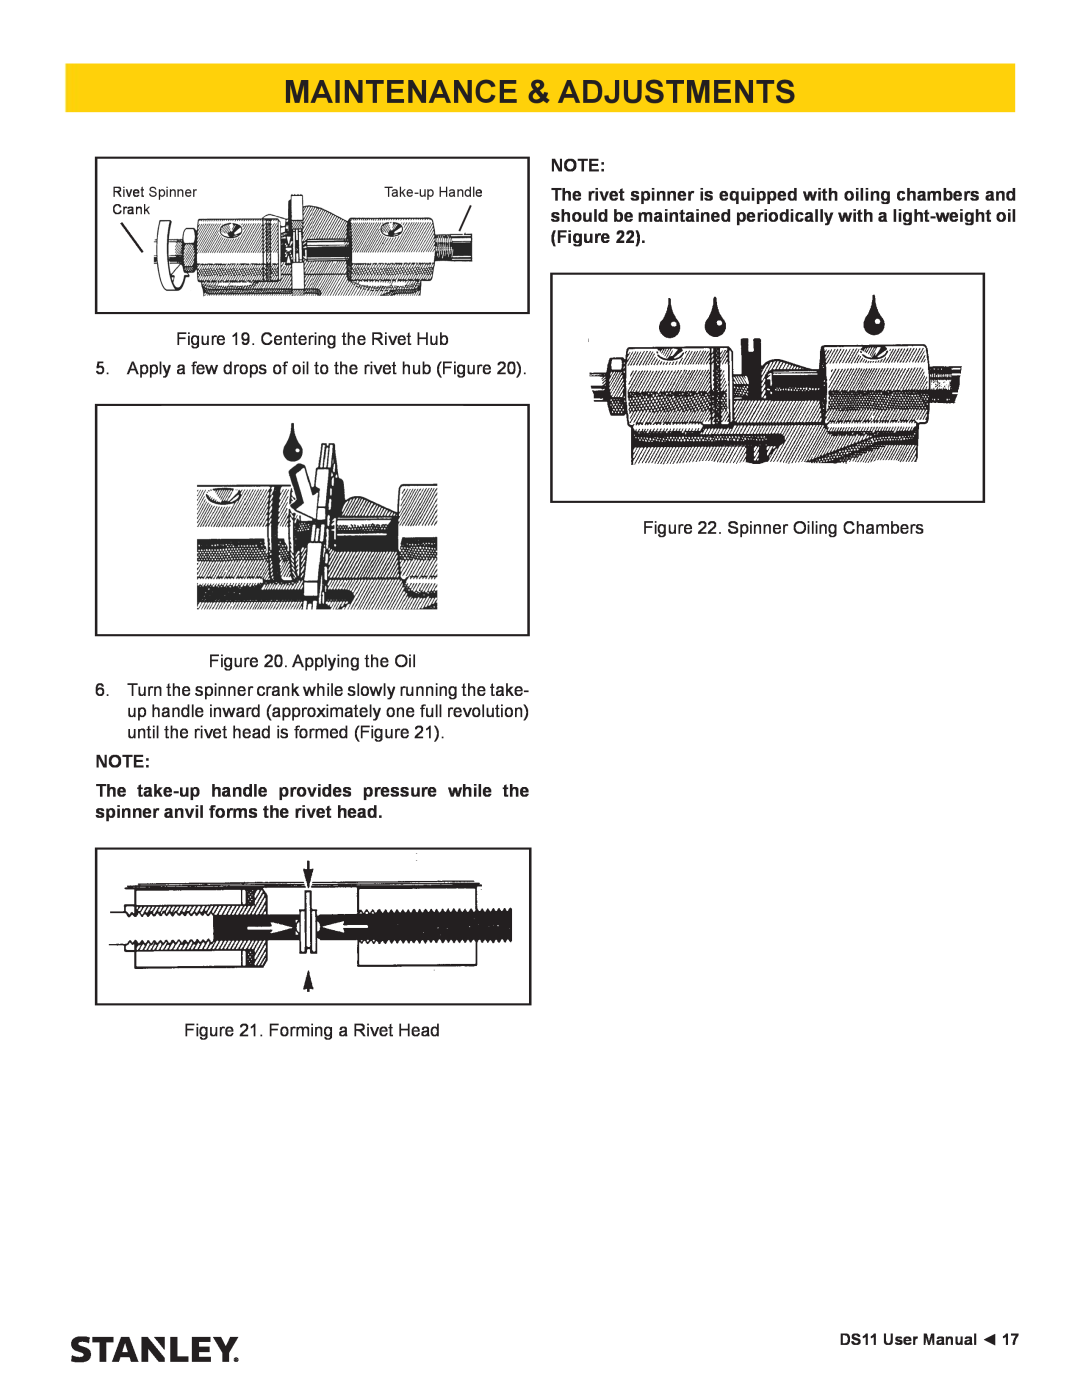 Stanley Black & Decker DS11 user manual Maintenance & Adjustments, Centering the Rivet Hub 